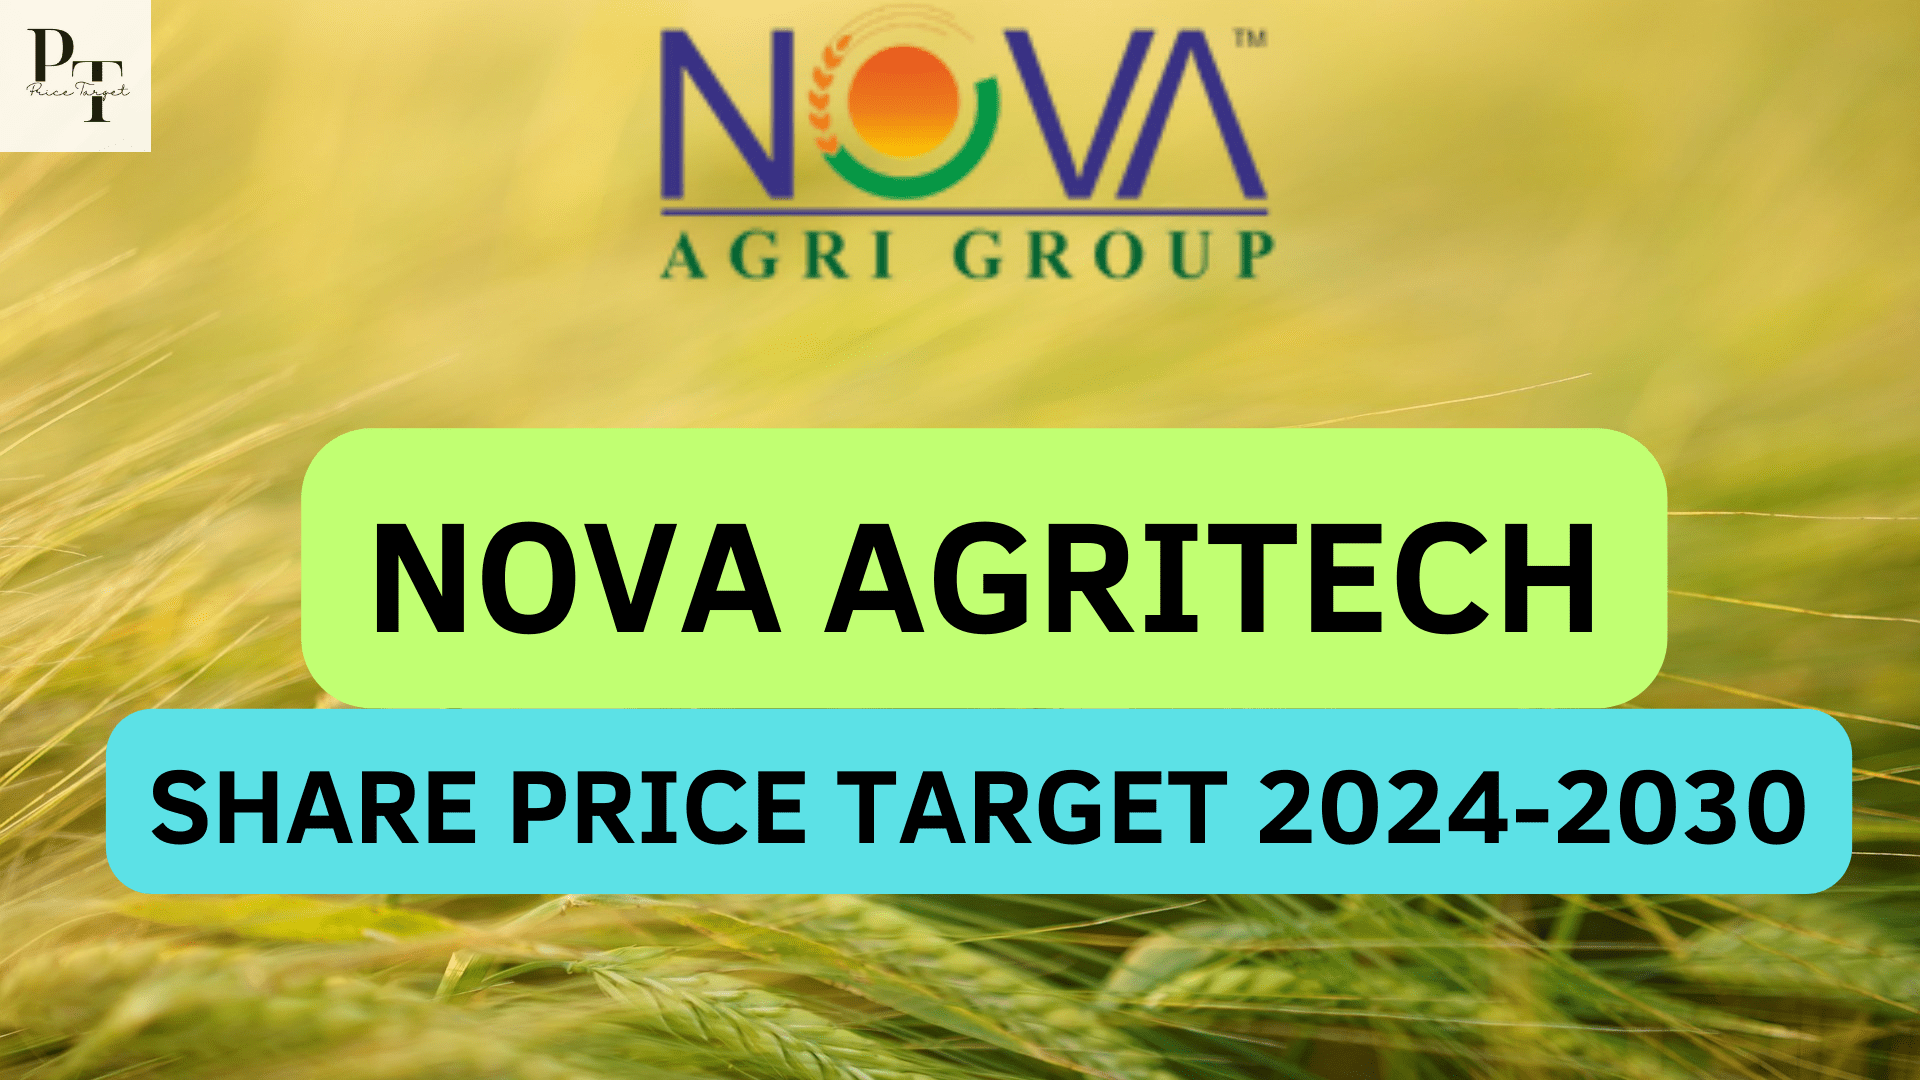 Nova Agritech Share Price Targets 2024, 2025, 2030 and Beyond A